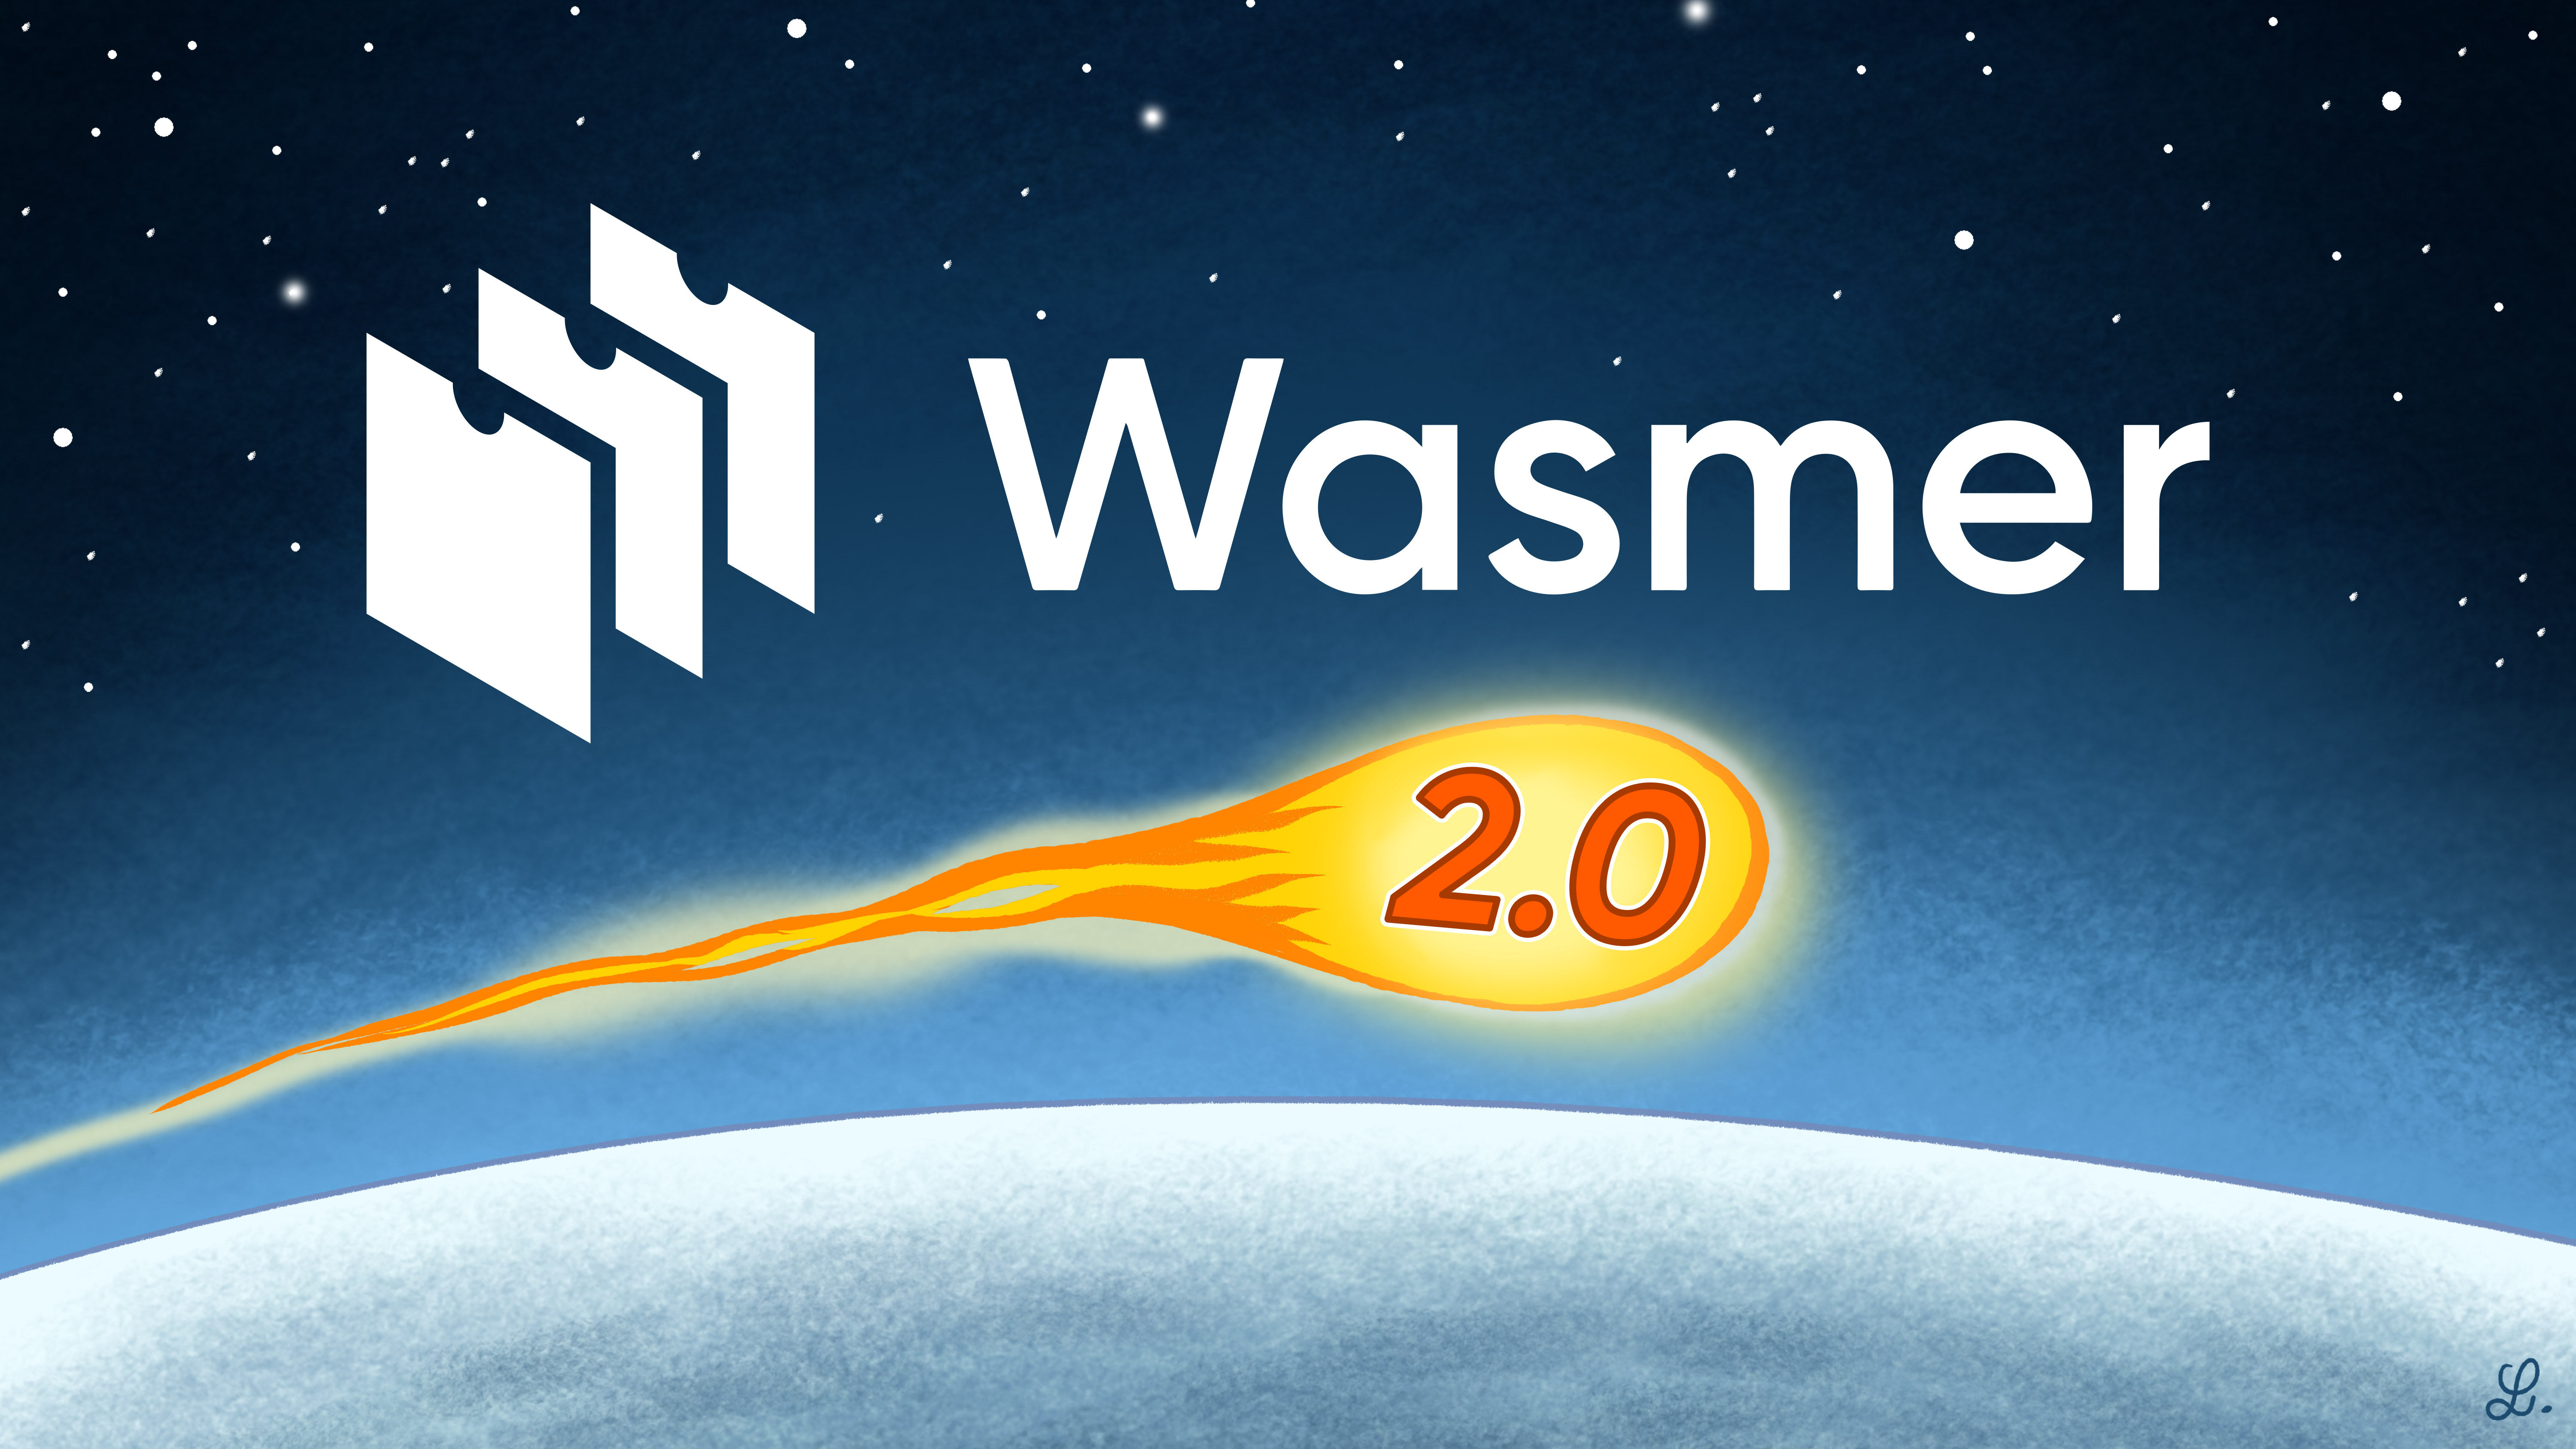 /images/blog/wasmer-2.0/wasmer-20.jpg